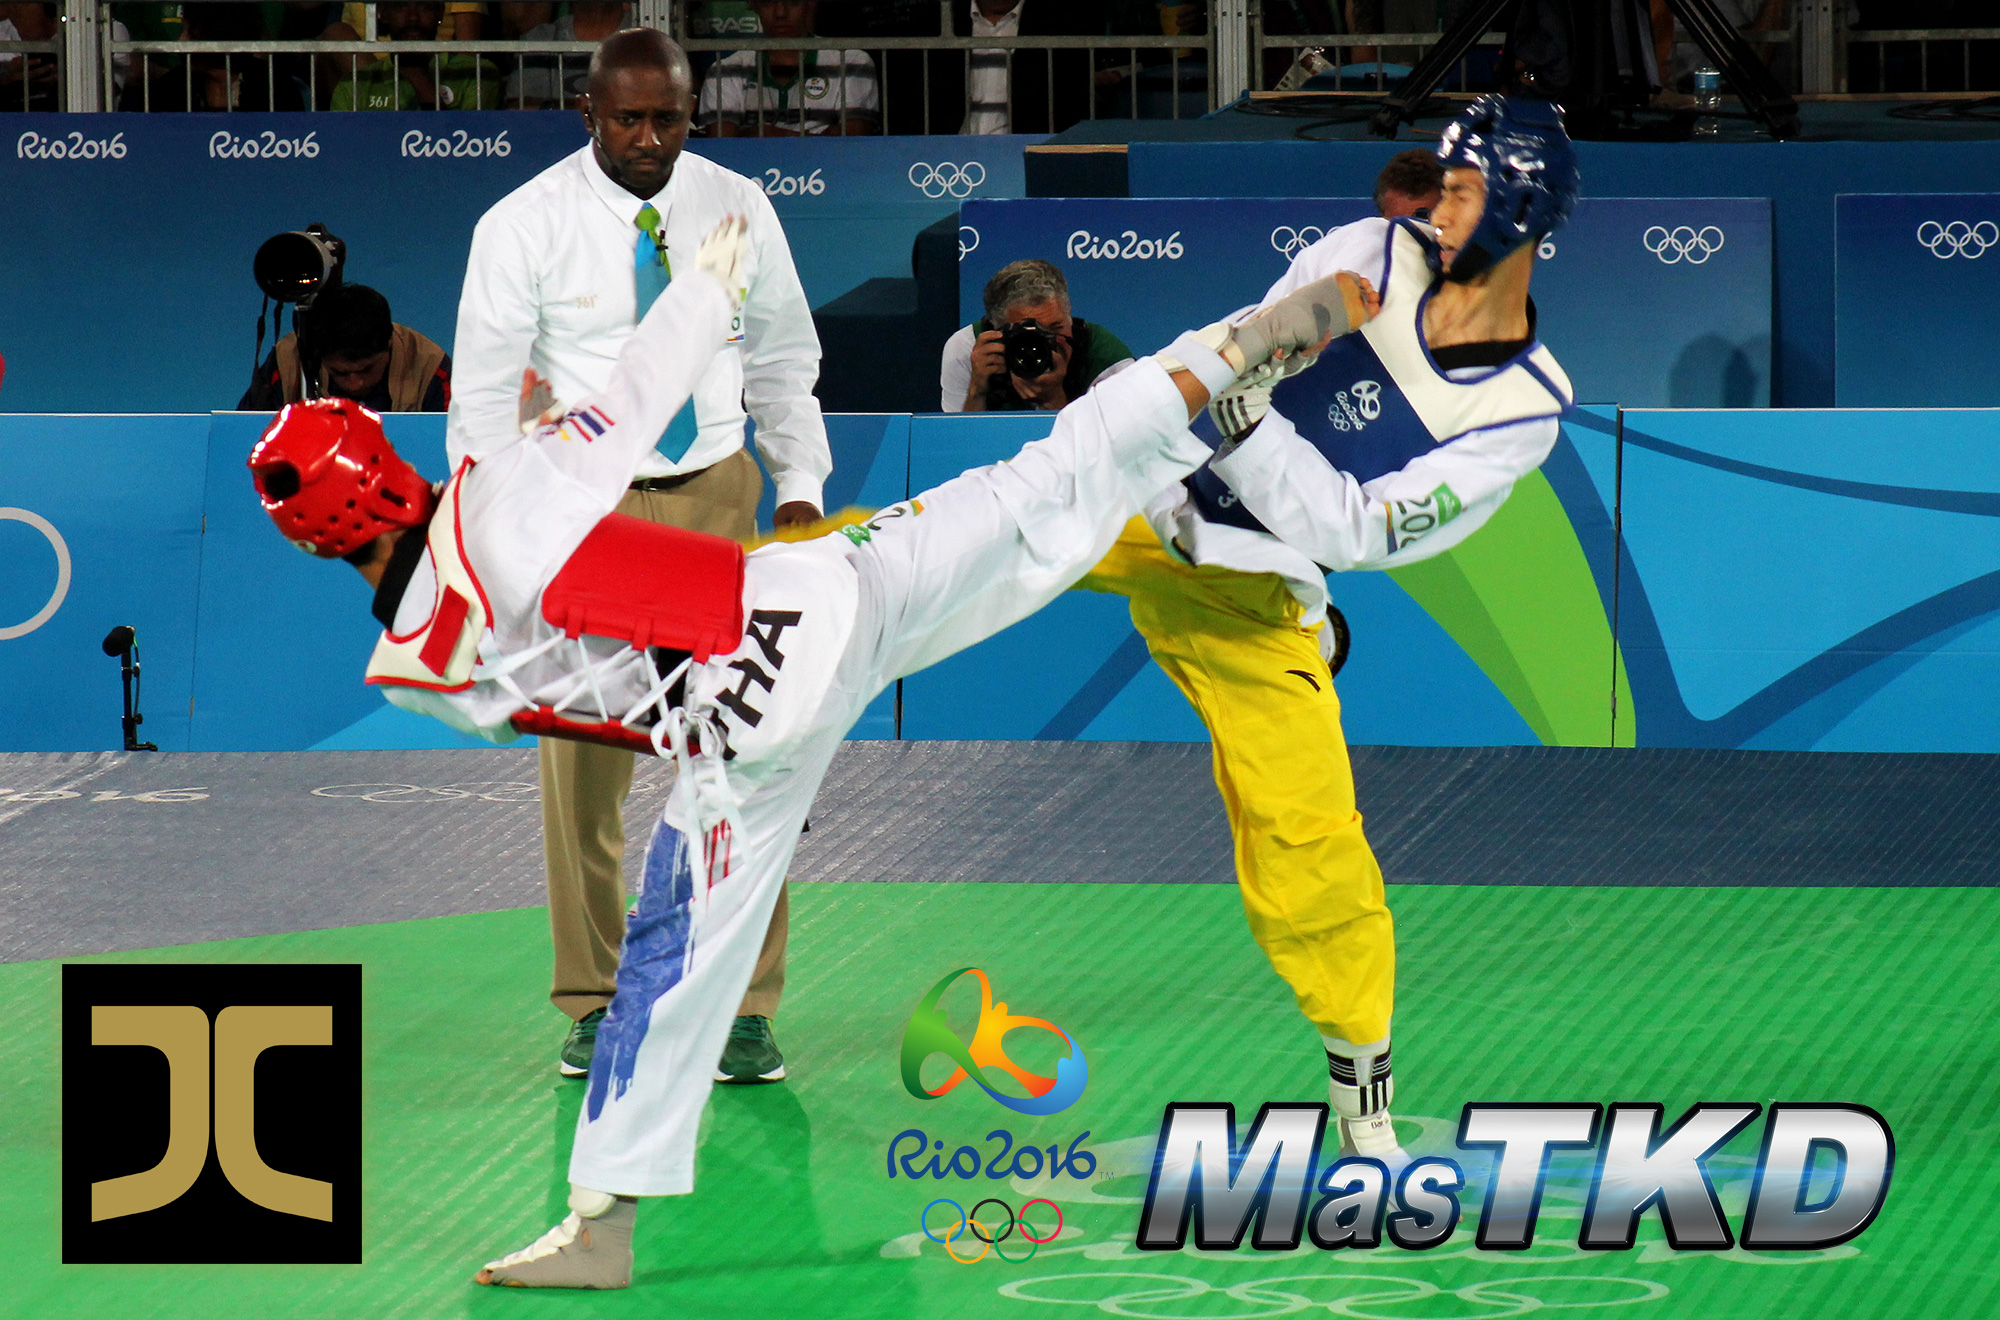 20160817_Taekwondo_JC_masTKD_Rio2016_06